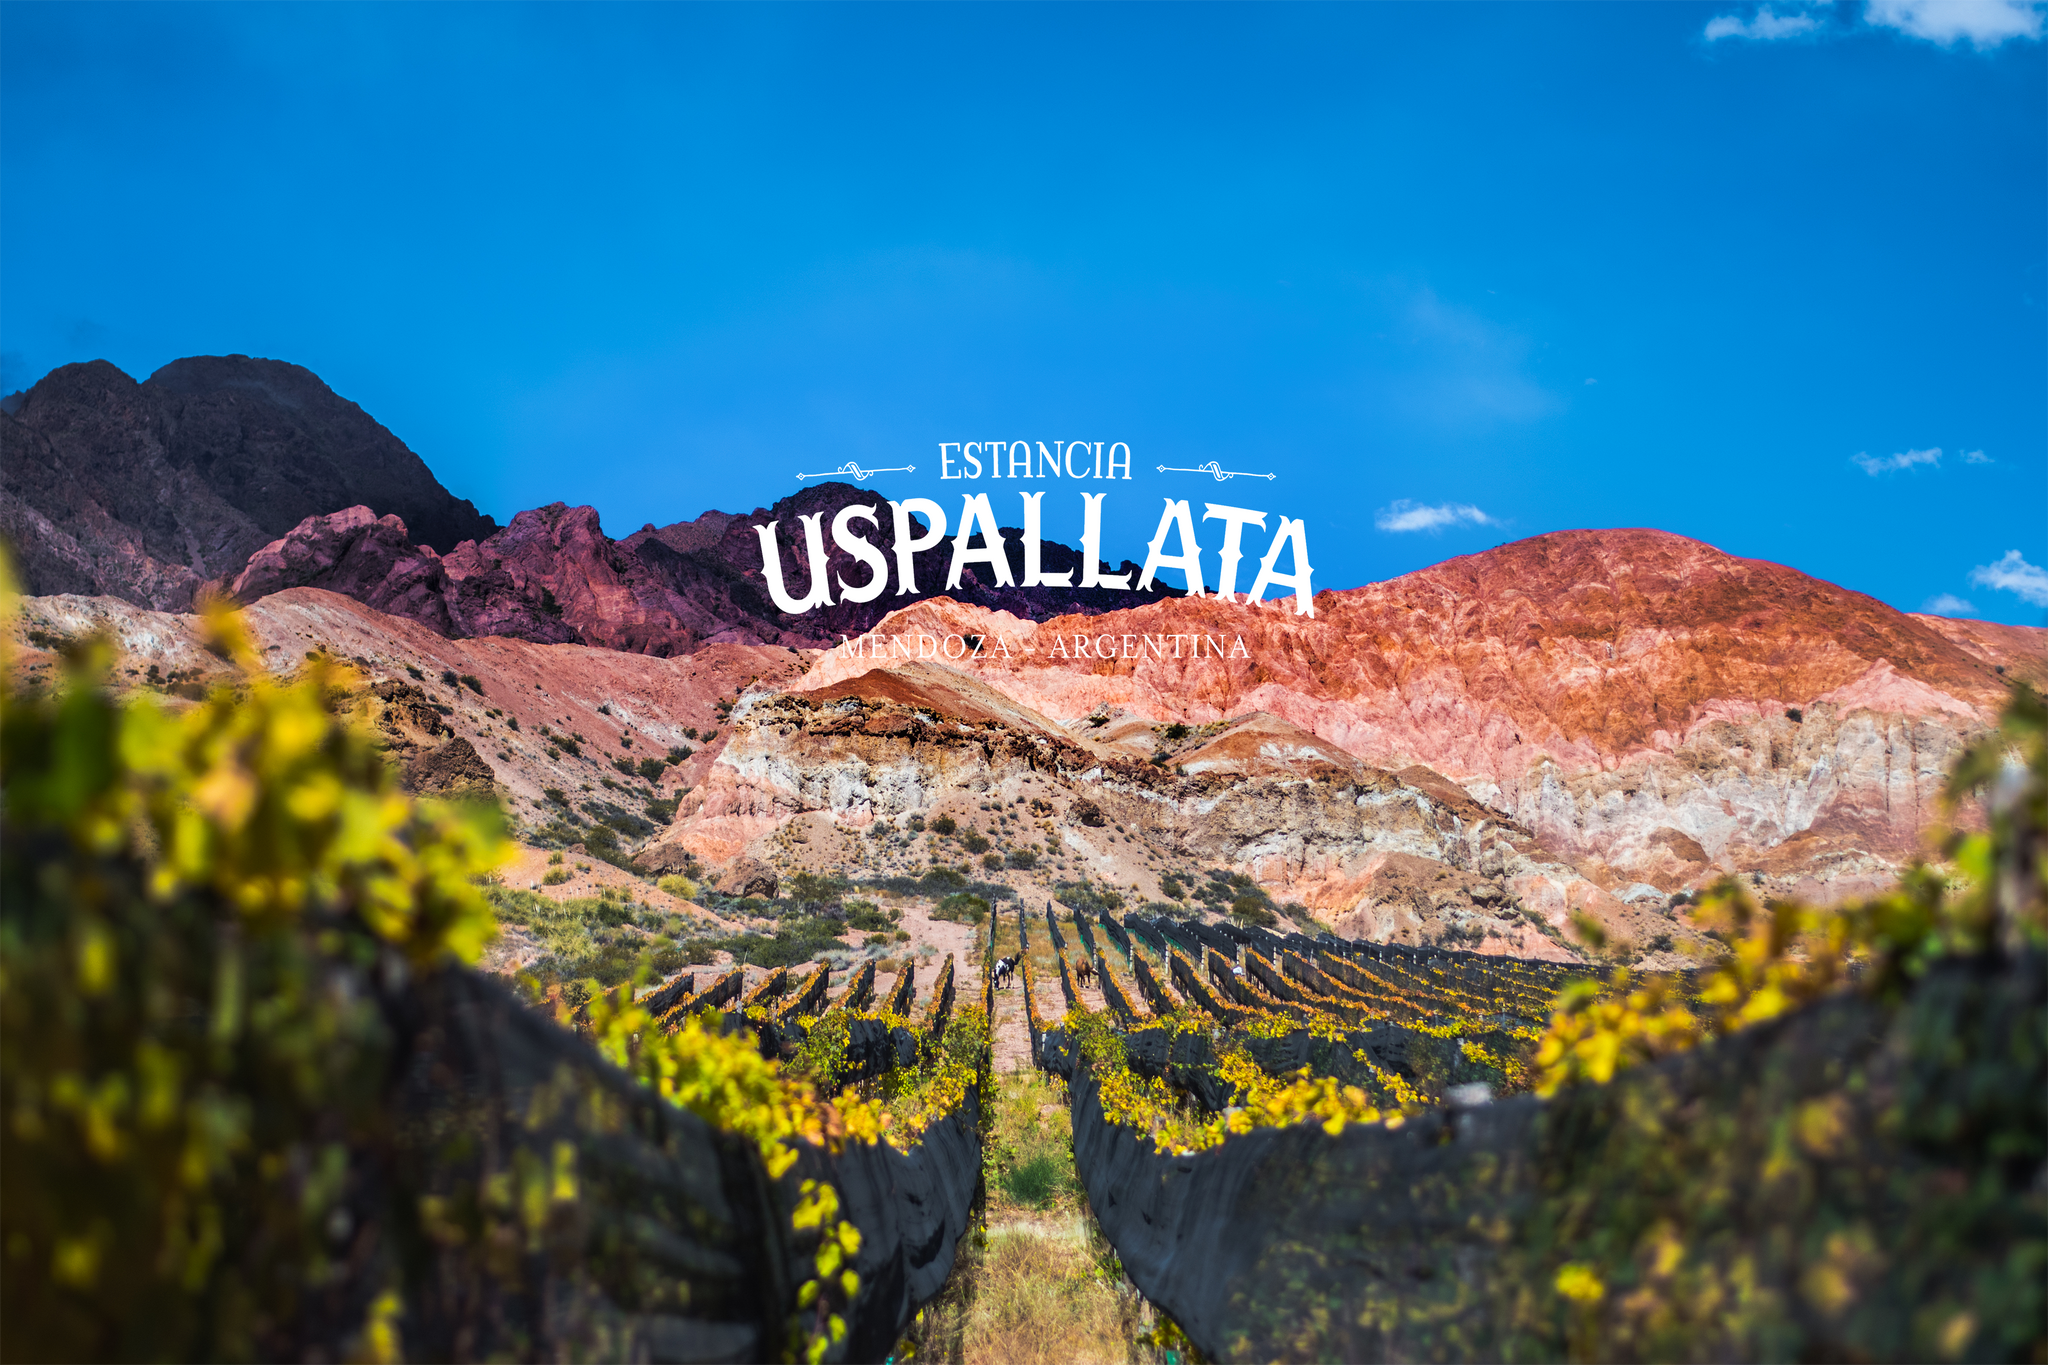 Producer: Uspallata